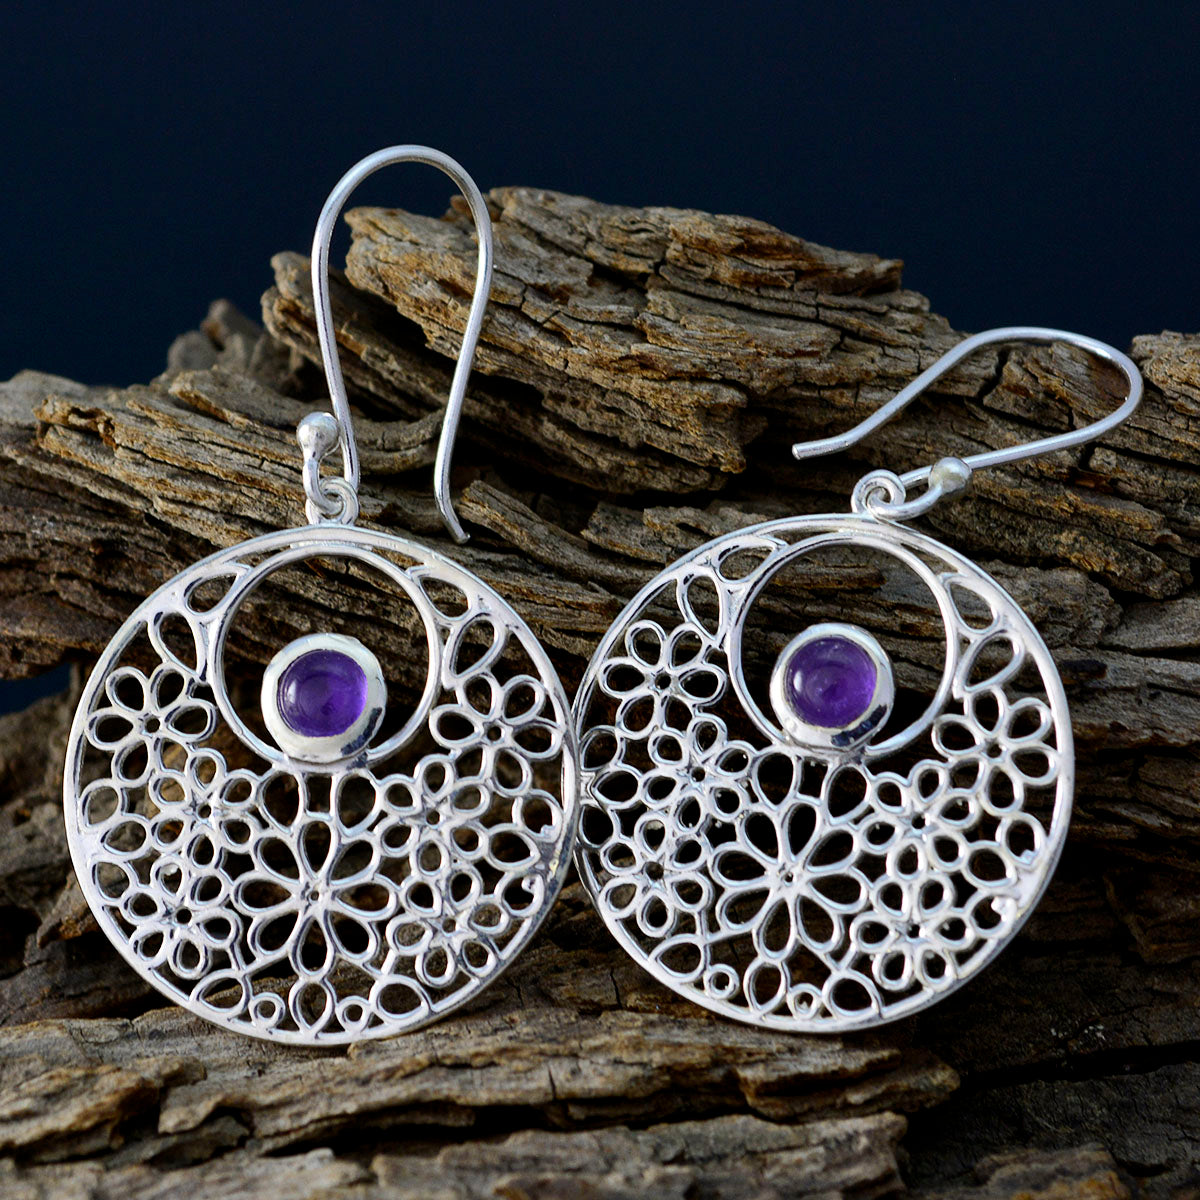 Riyo Nice Gemstone round Cabochon Purple Amethyst Silver Earrings gift for grandmother